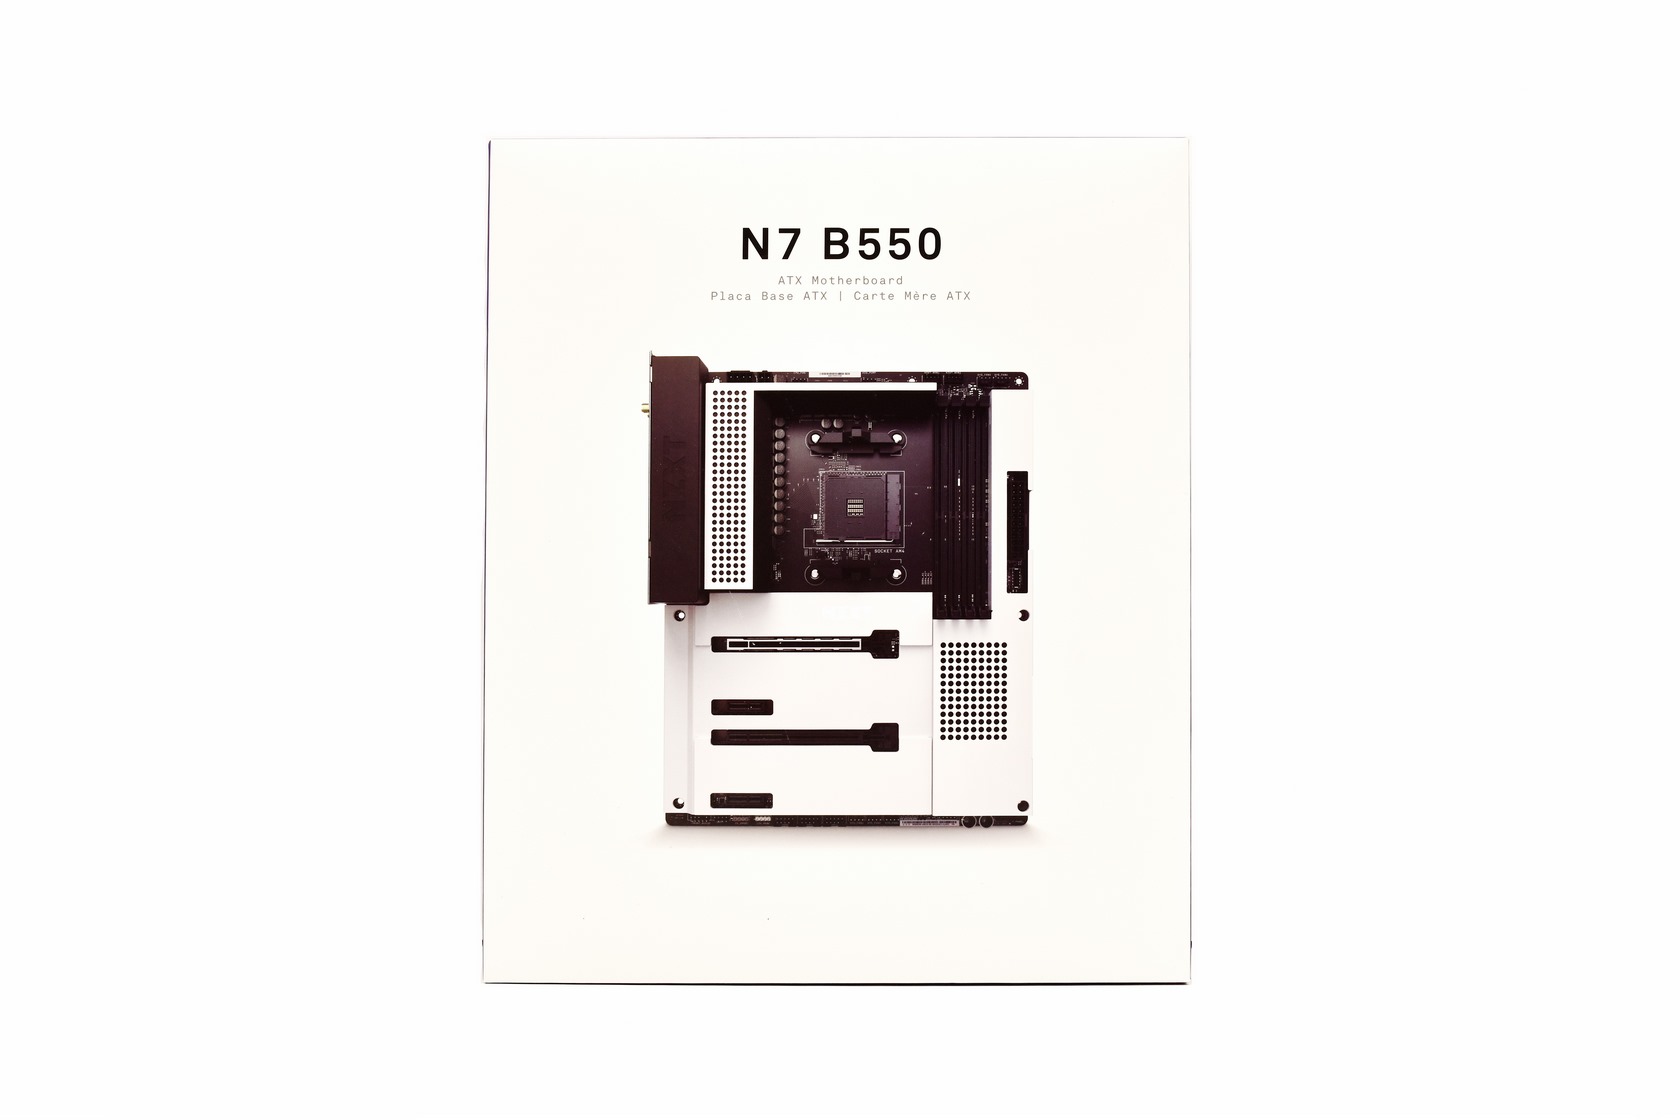 NZXT N7 B550 Motherboard Review